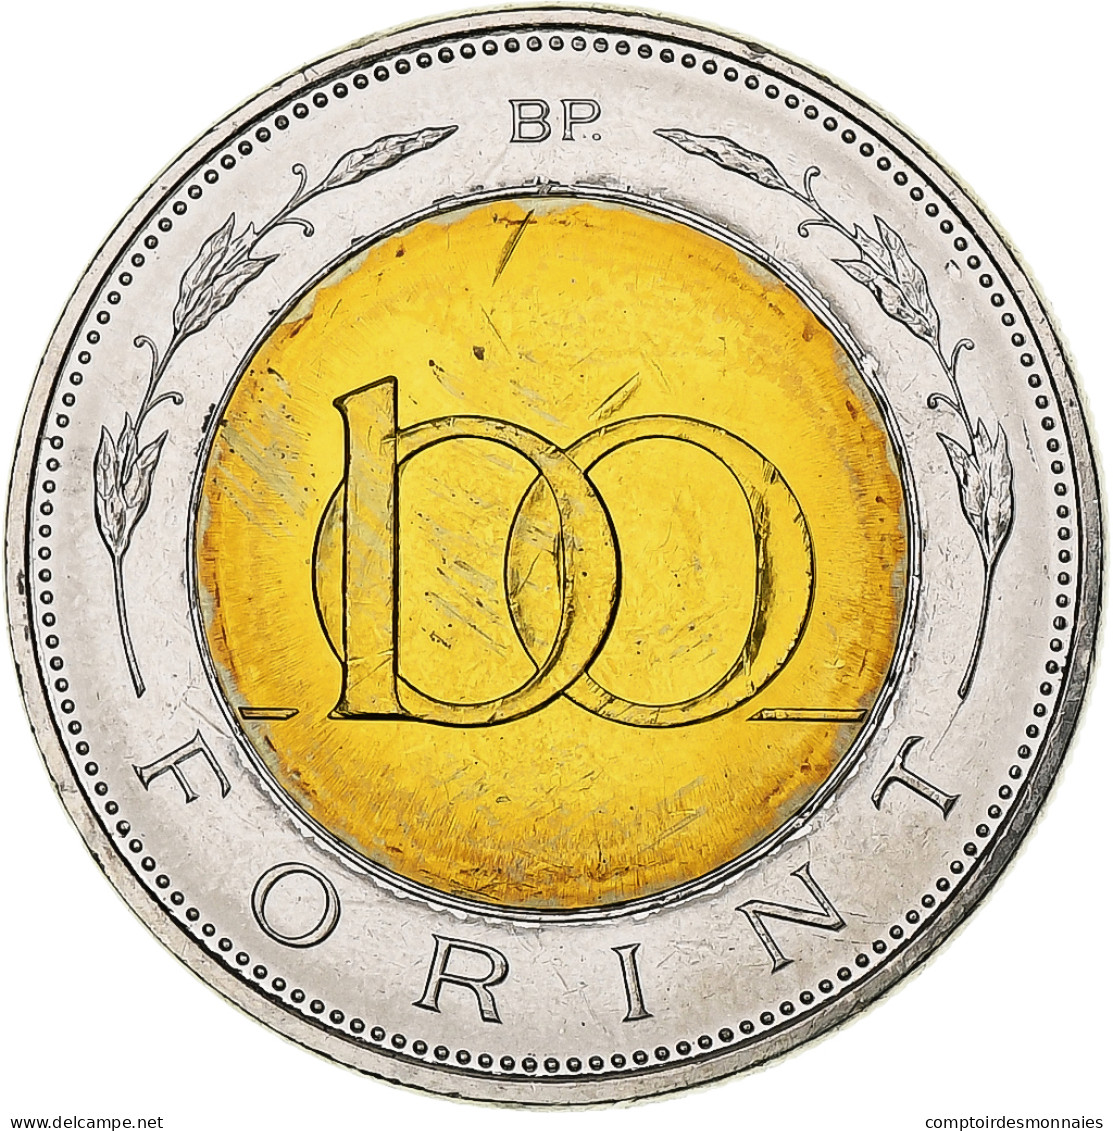 Hongrie, 100 Forint, Szaz, 2007, Budapest, Bimétallique, SPL+, KM:721 - Hongarije